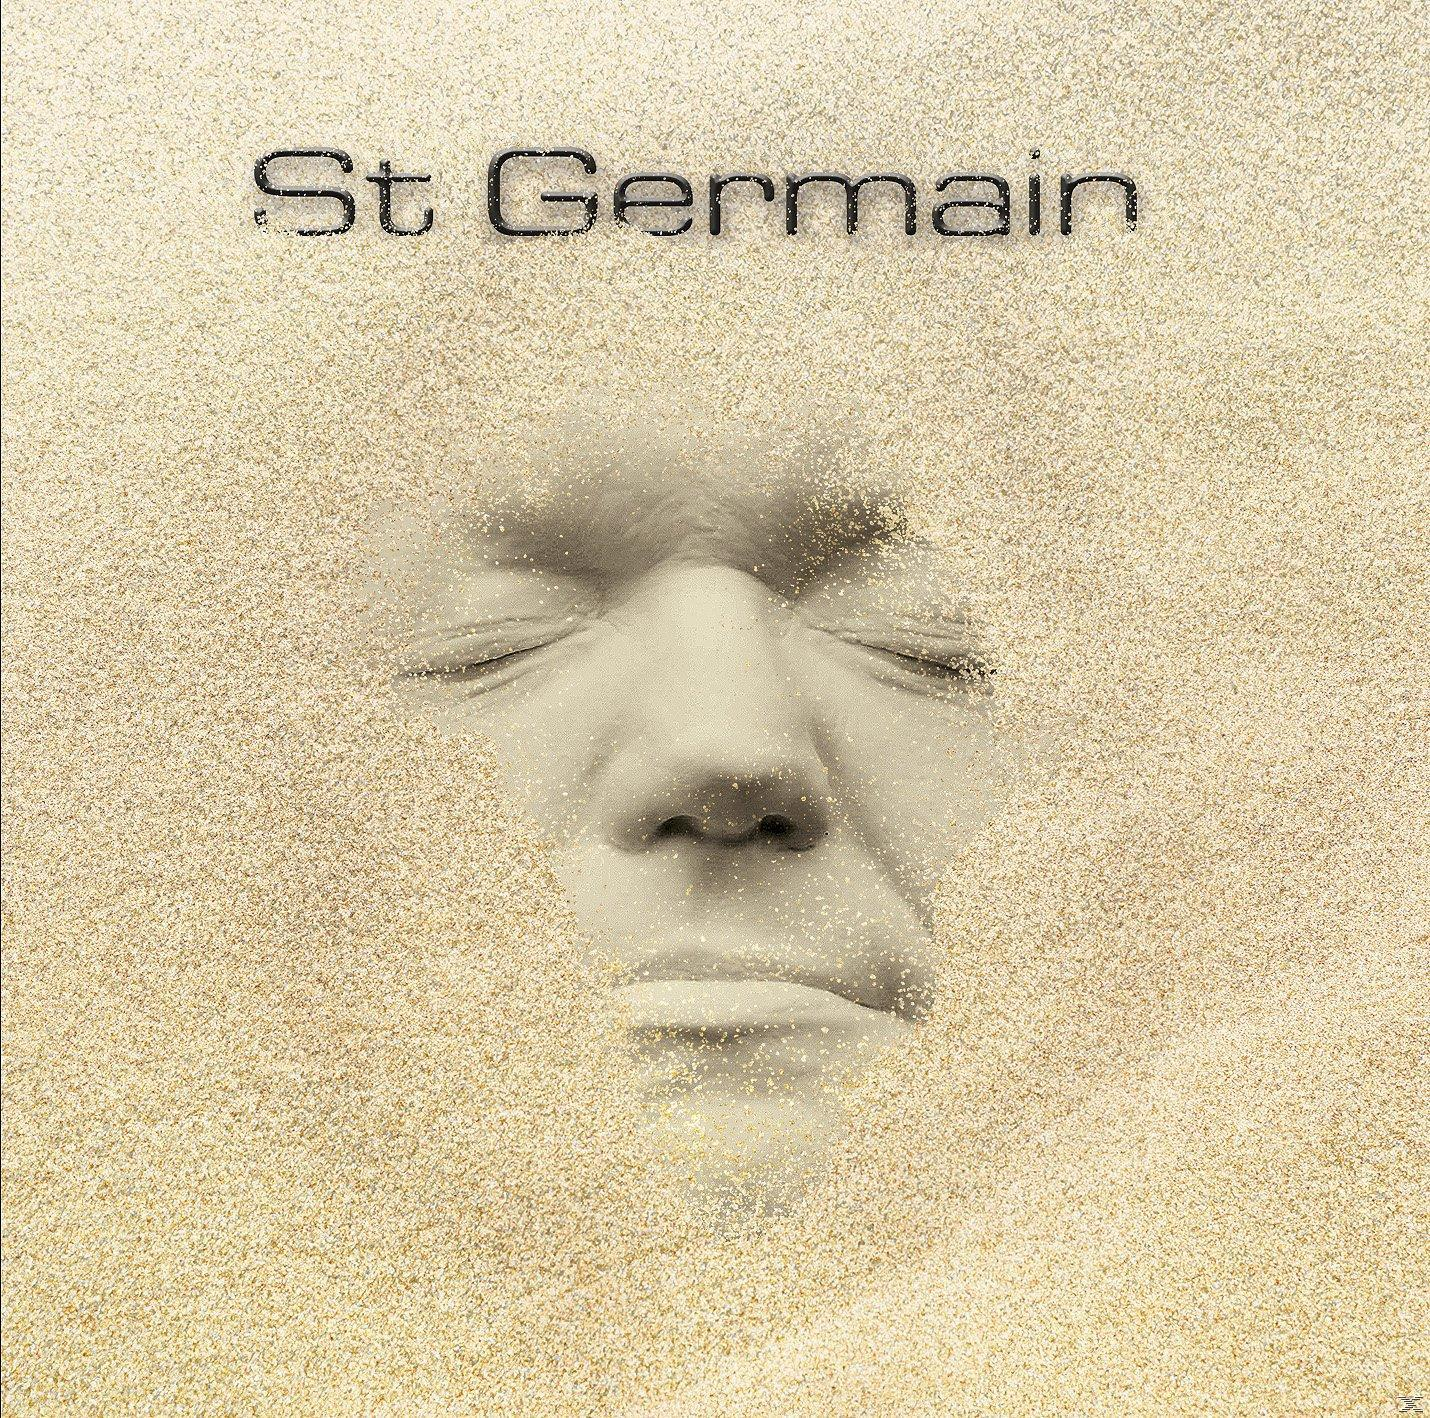 Germain - St. (CD) Germain - St